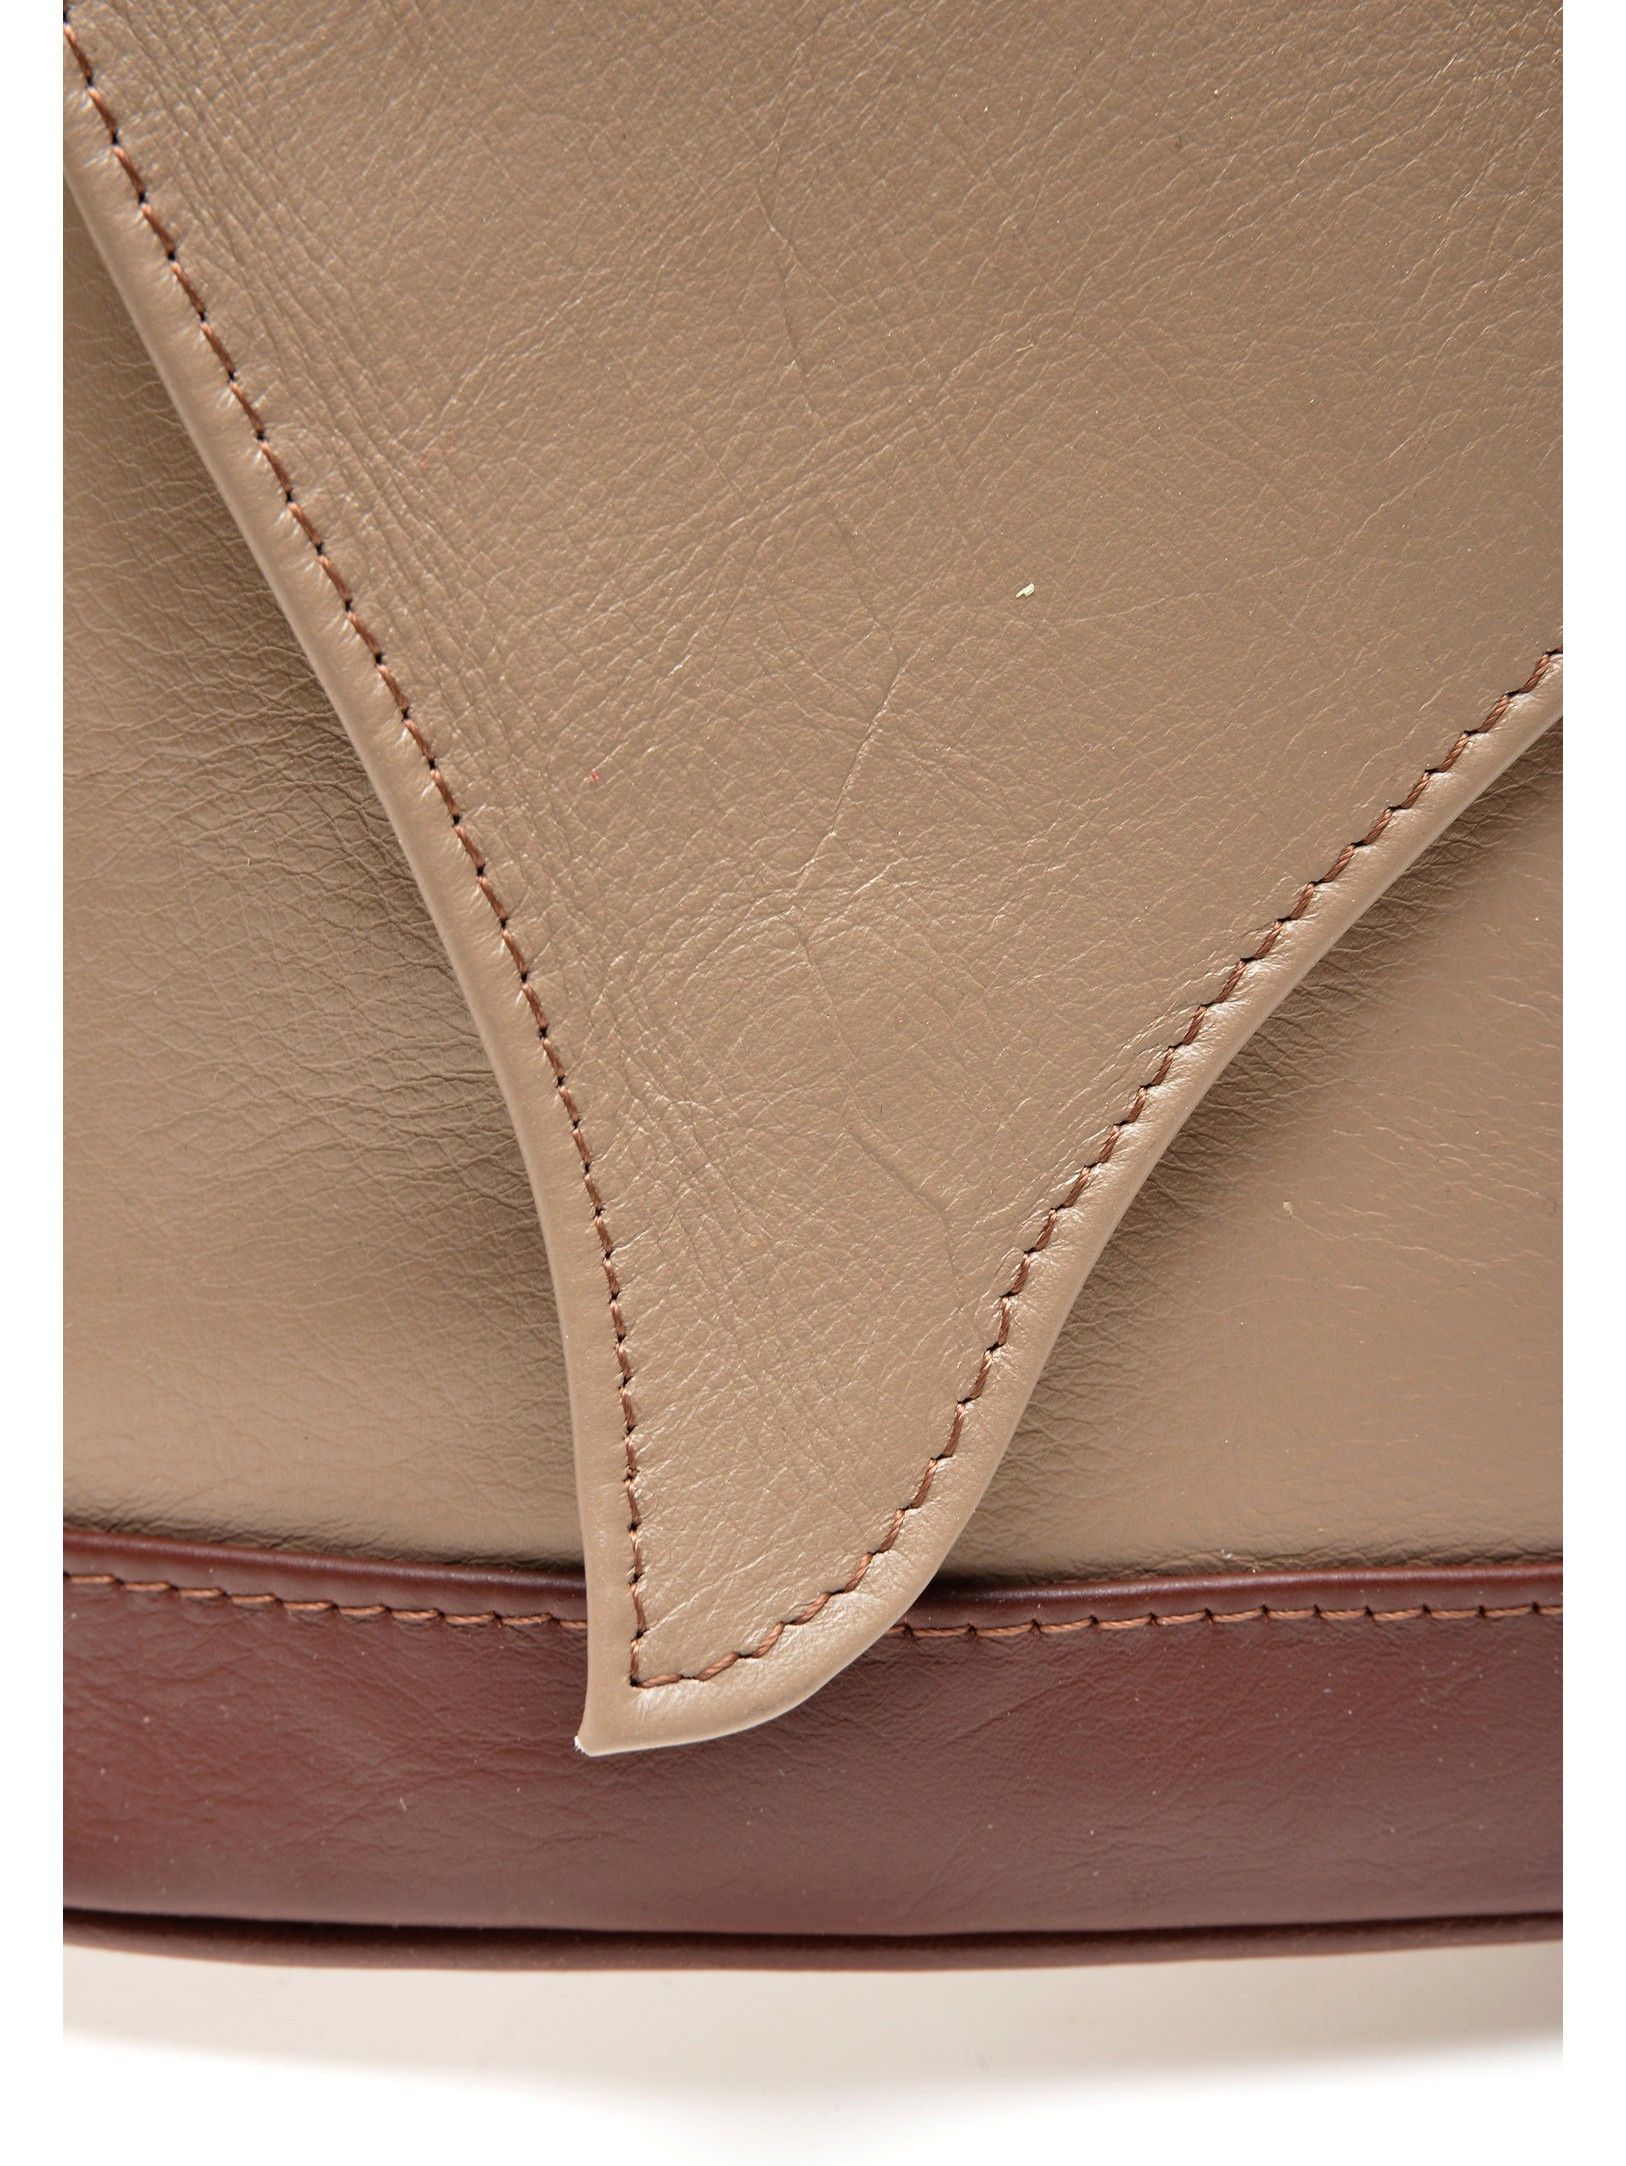 Backpack
100% cow leather
Front zip closure
Inner zip pocket
Back zip pocket
Dimensions (L): 27x23x10.5 cm
Handle: / cm
Shoulder strap: 2x95 cm adjustable